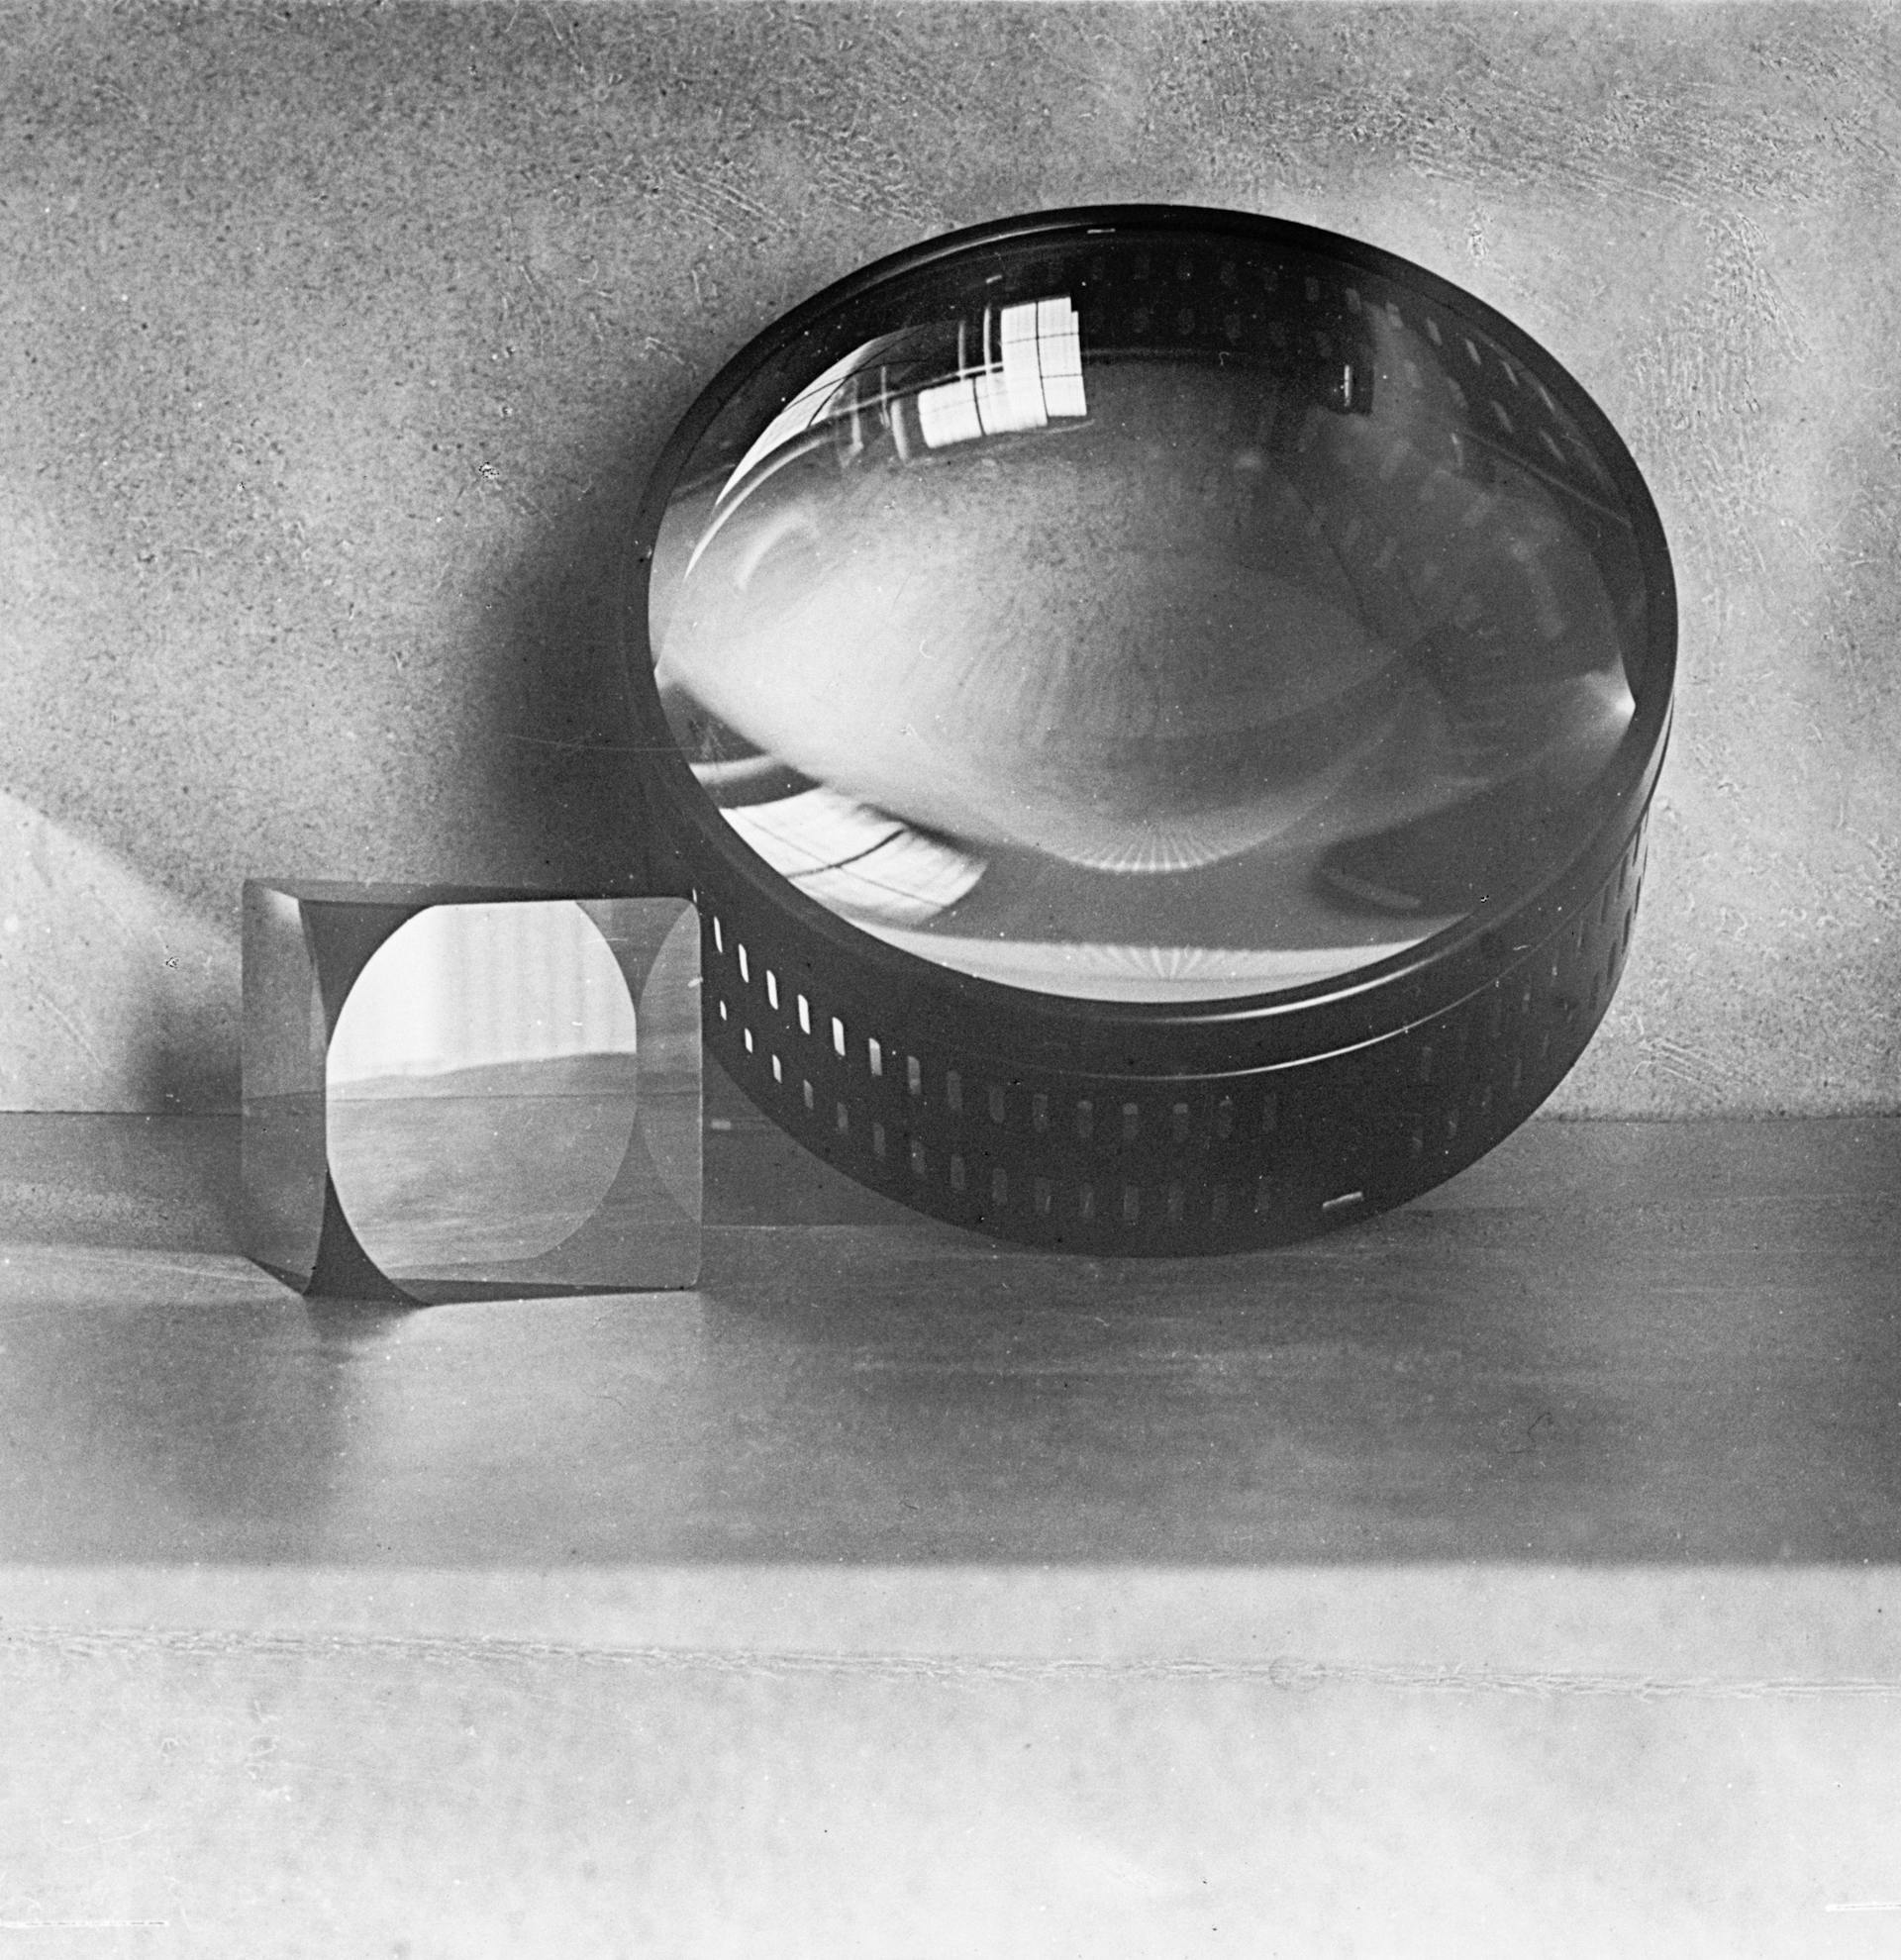  Capacitor and prism for projection. Photo Franz Stoedtner. Collection SLUB Dresden / Deutsche Fotothek 